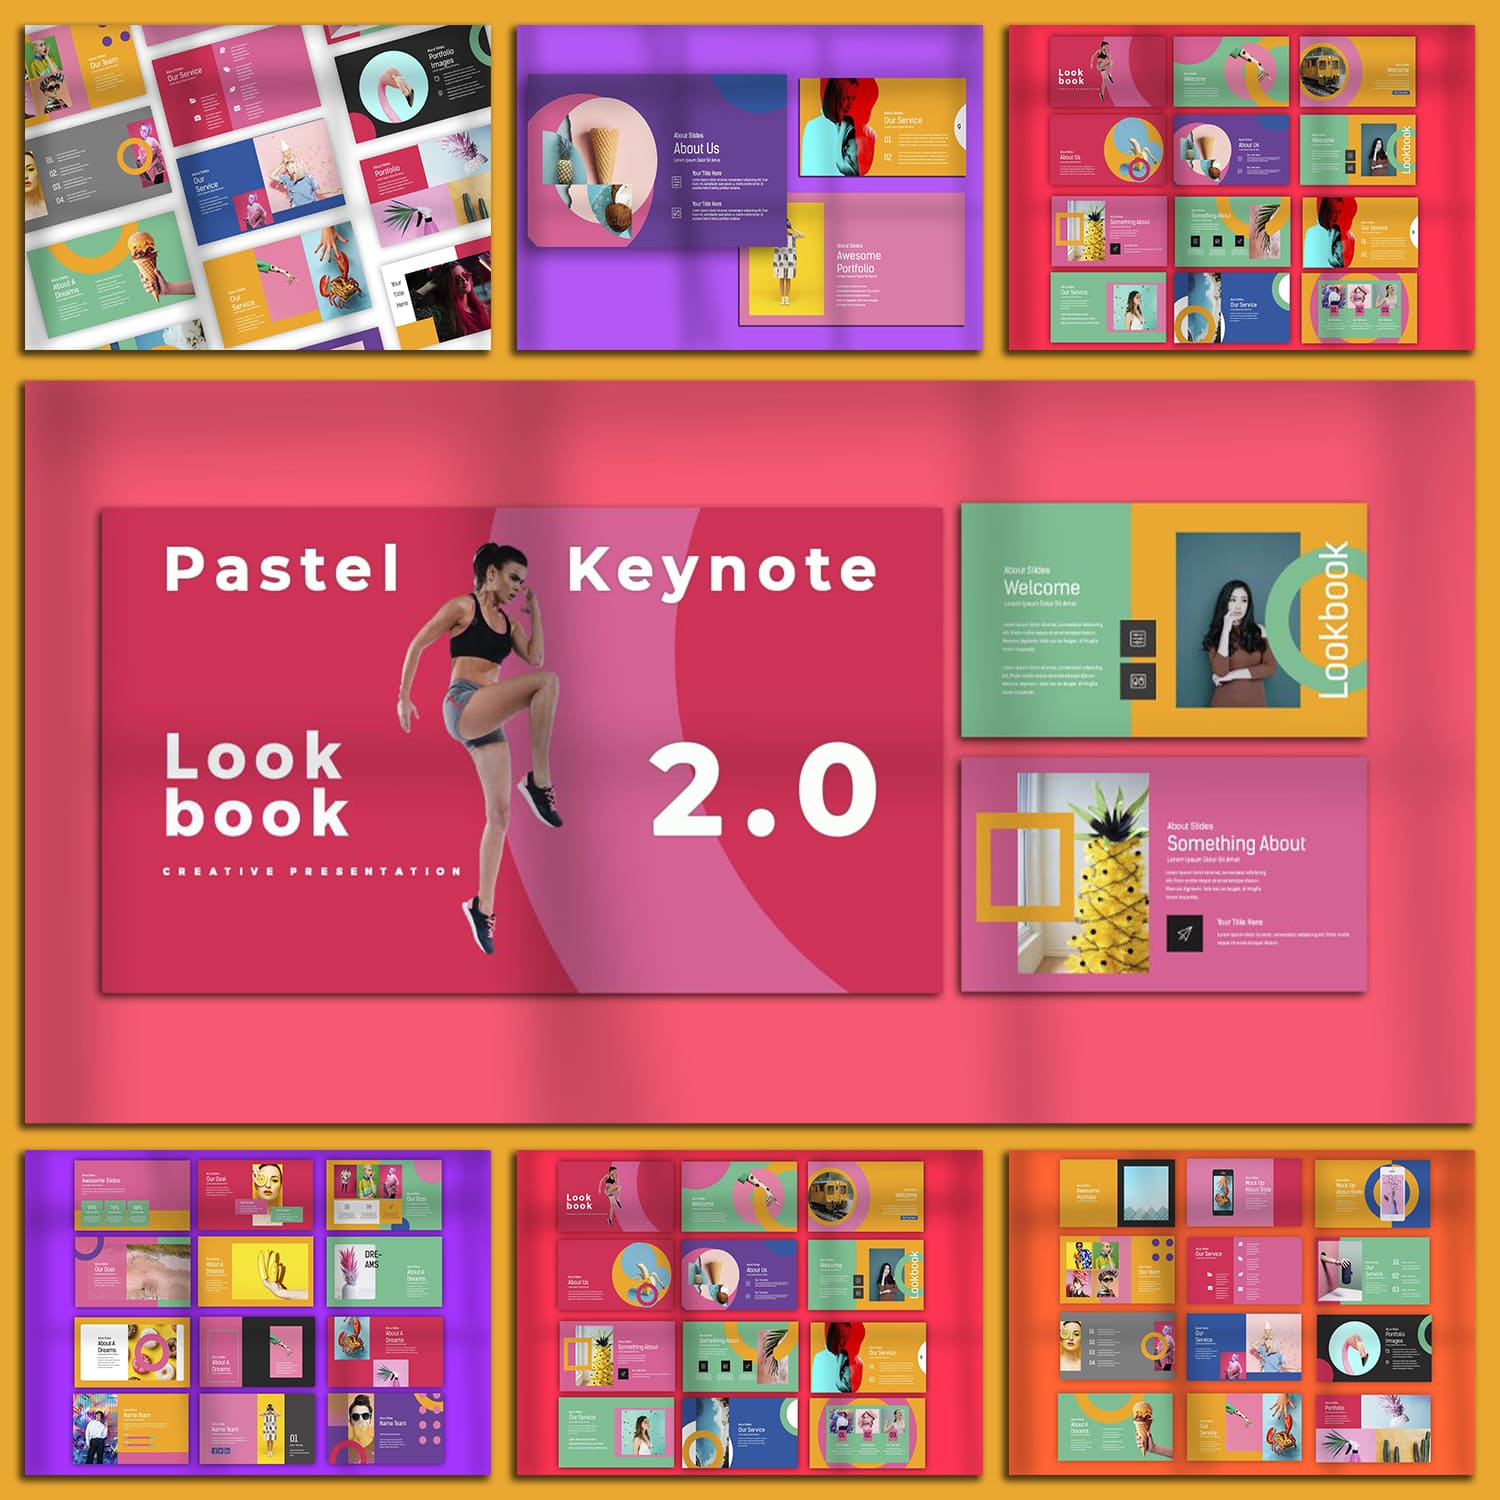 LookBook Pastel Keynote main cover.